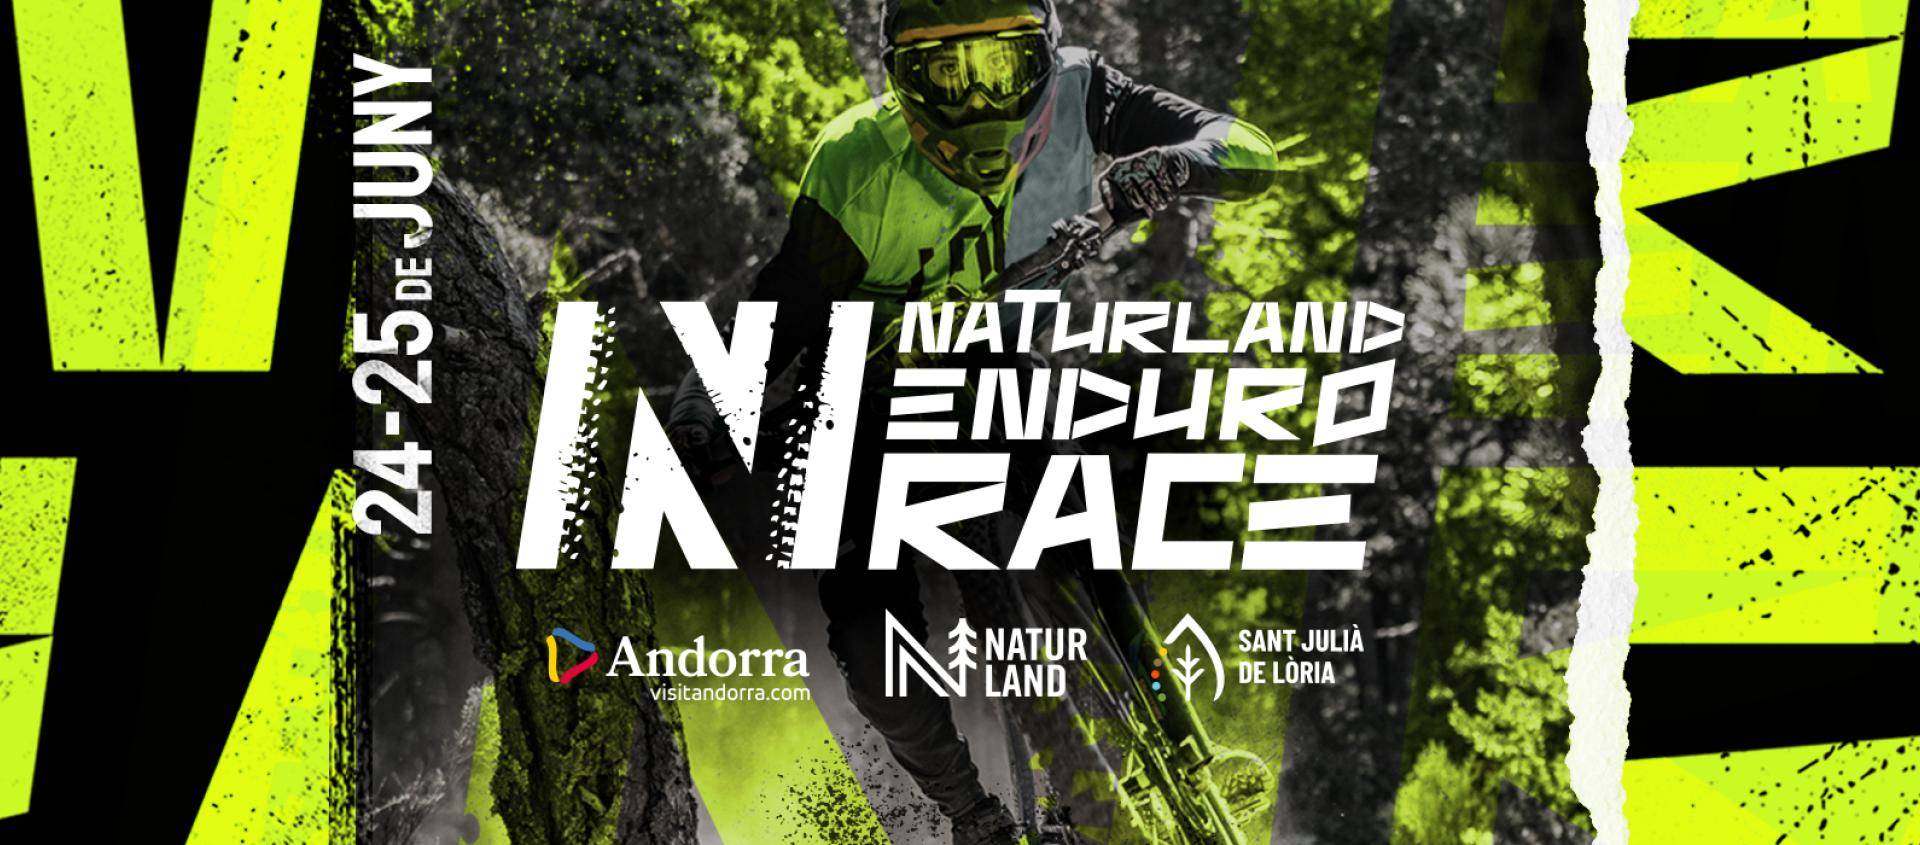 Naturland Enduro Race